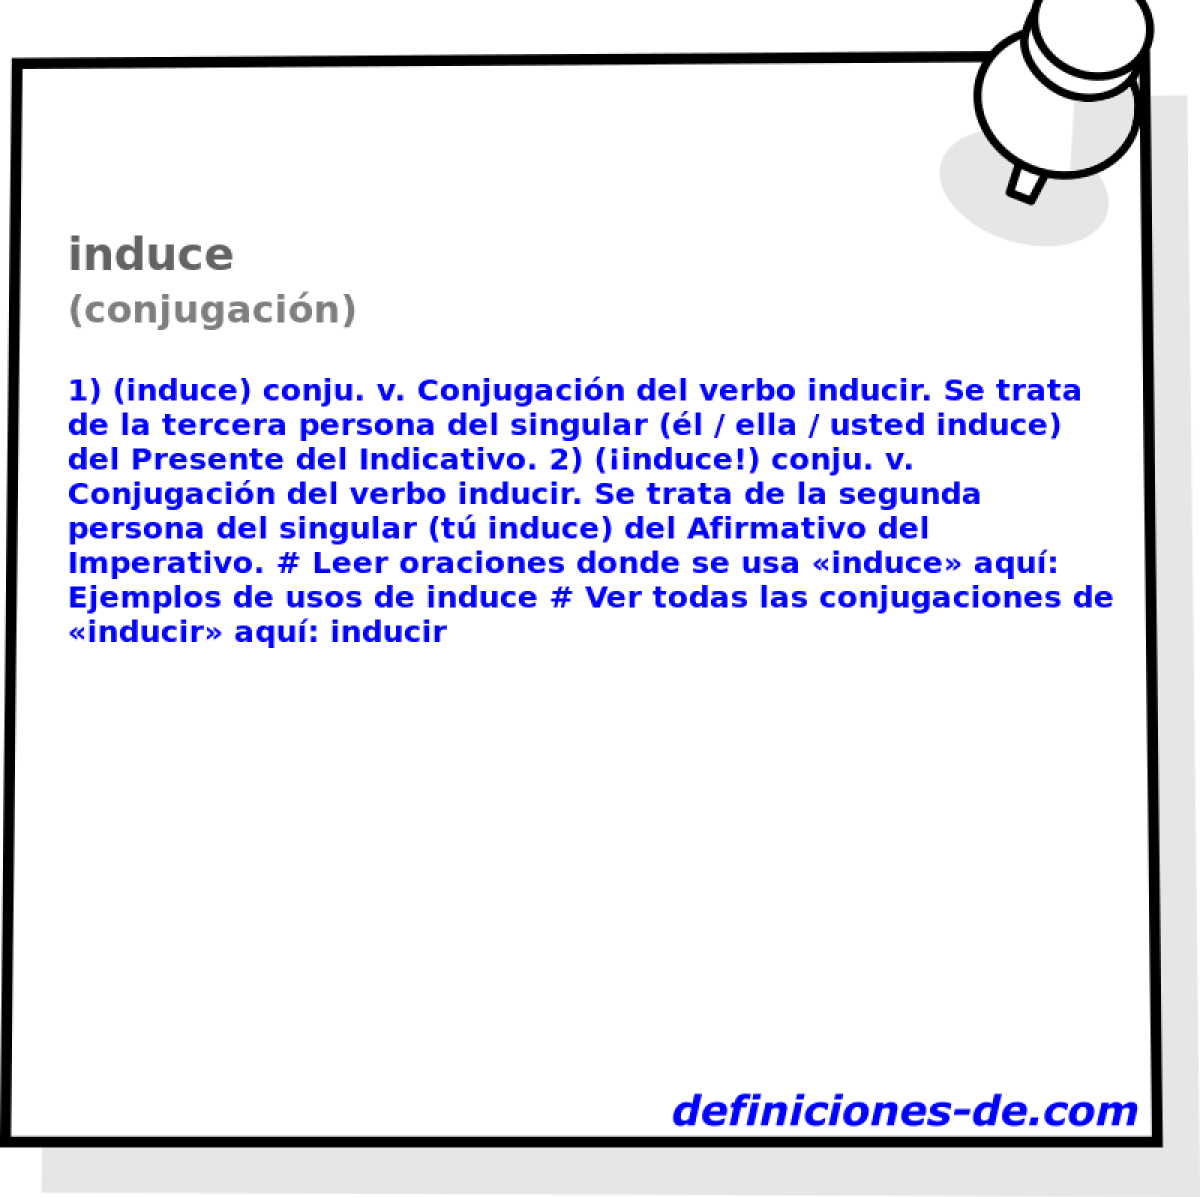 induce (conjugacin)